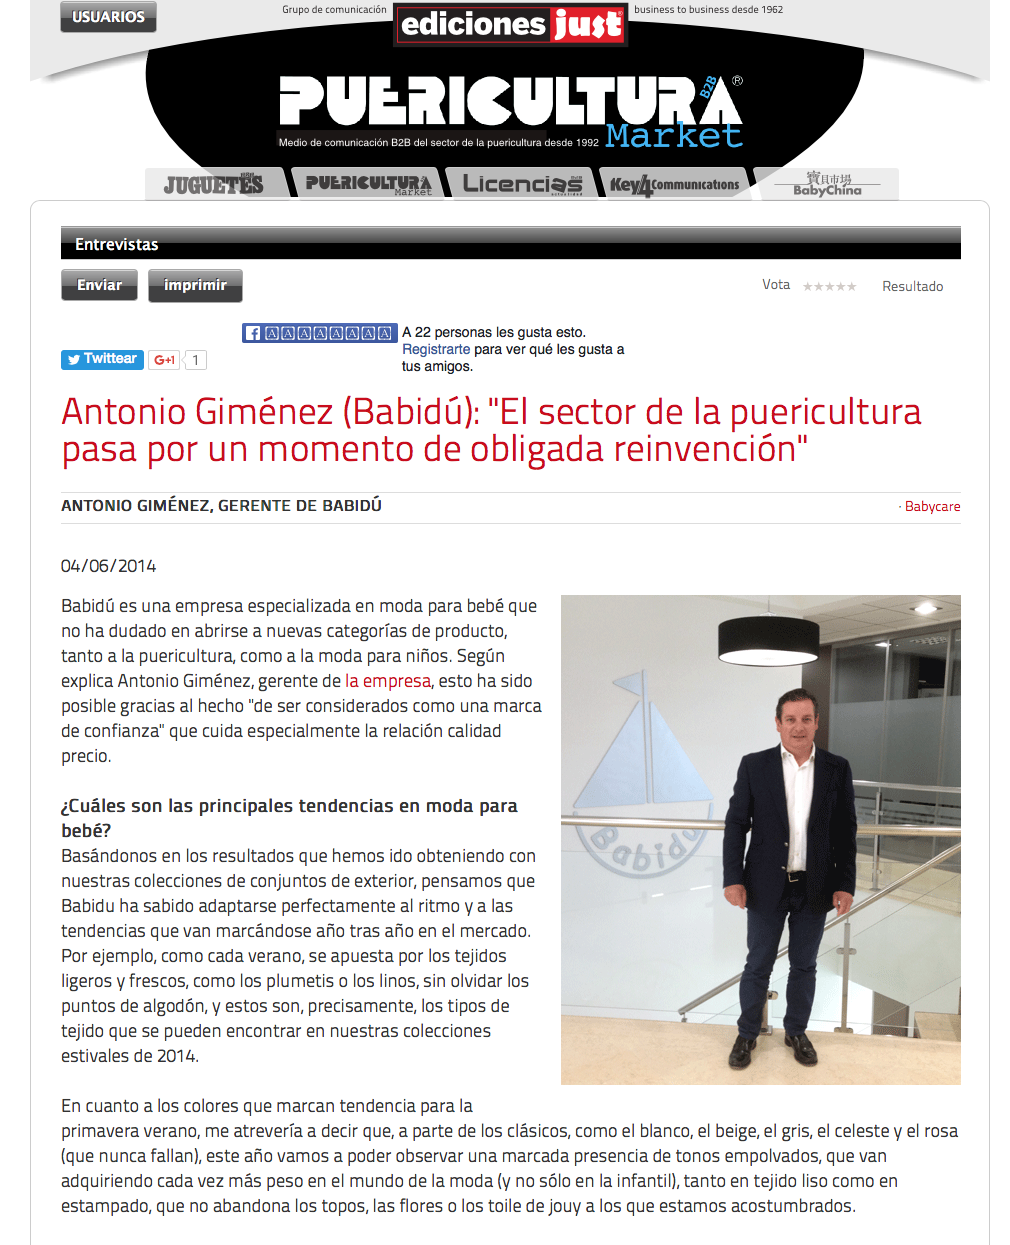 INTERVIEW TO ANTONIO GIMÉNEZ ON THE PUERICULTURA MARKET WEBSITE